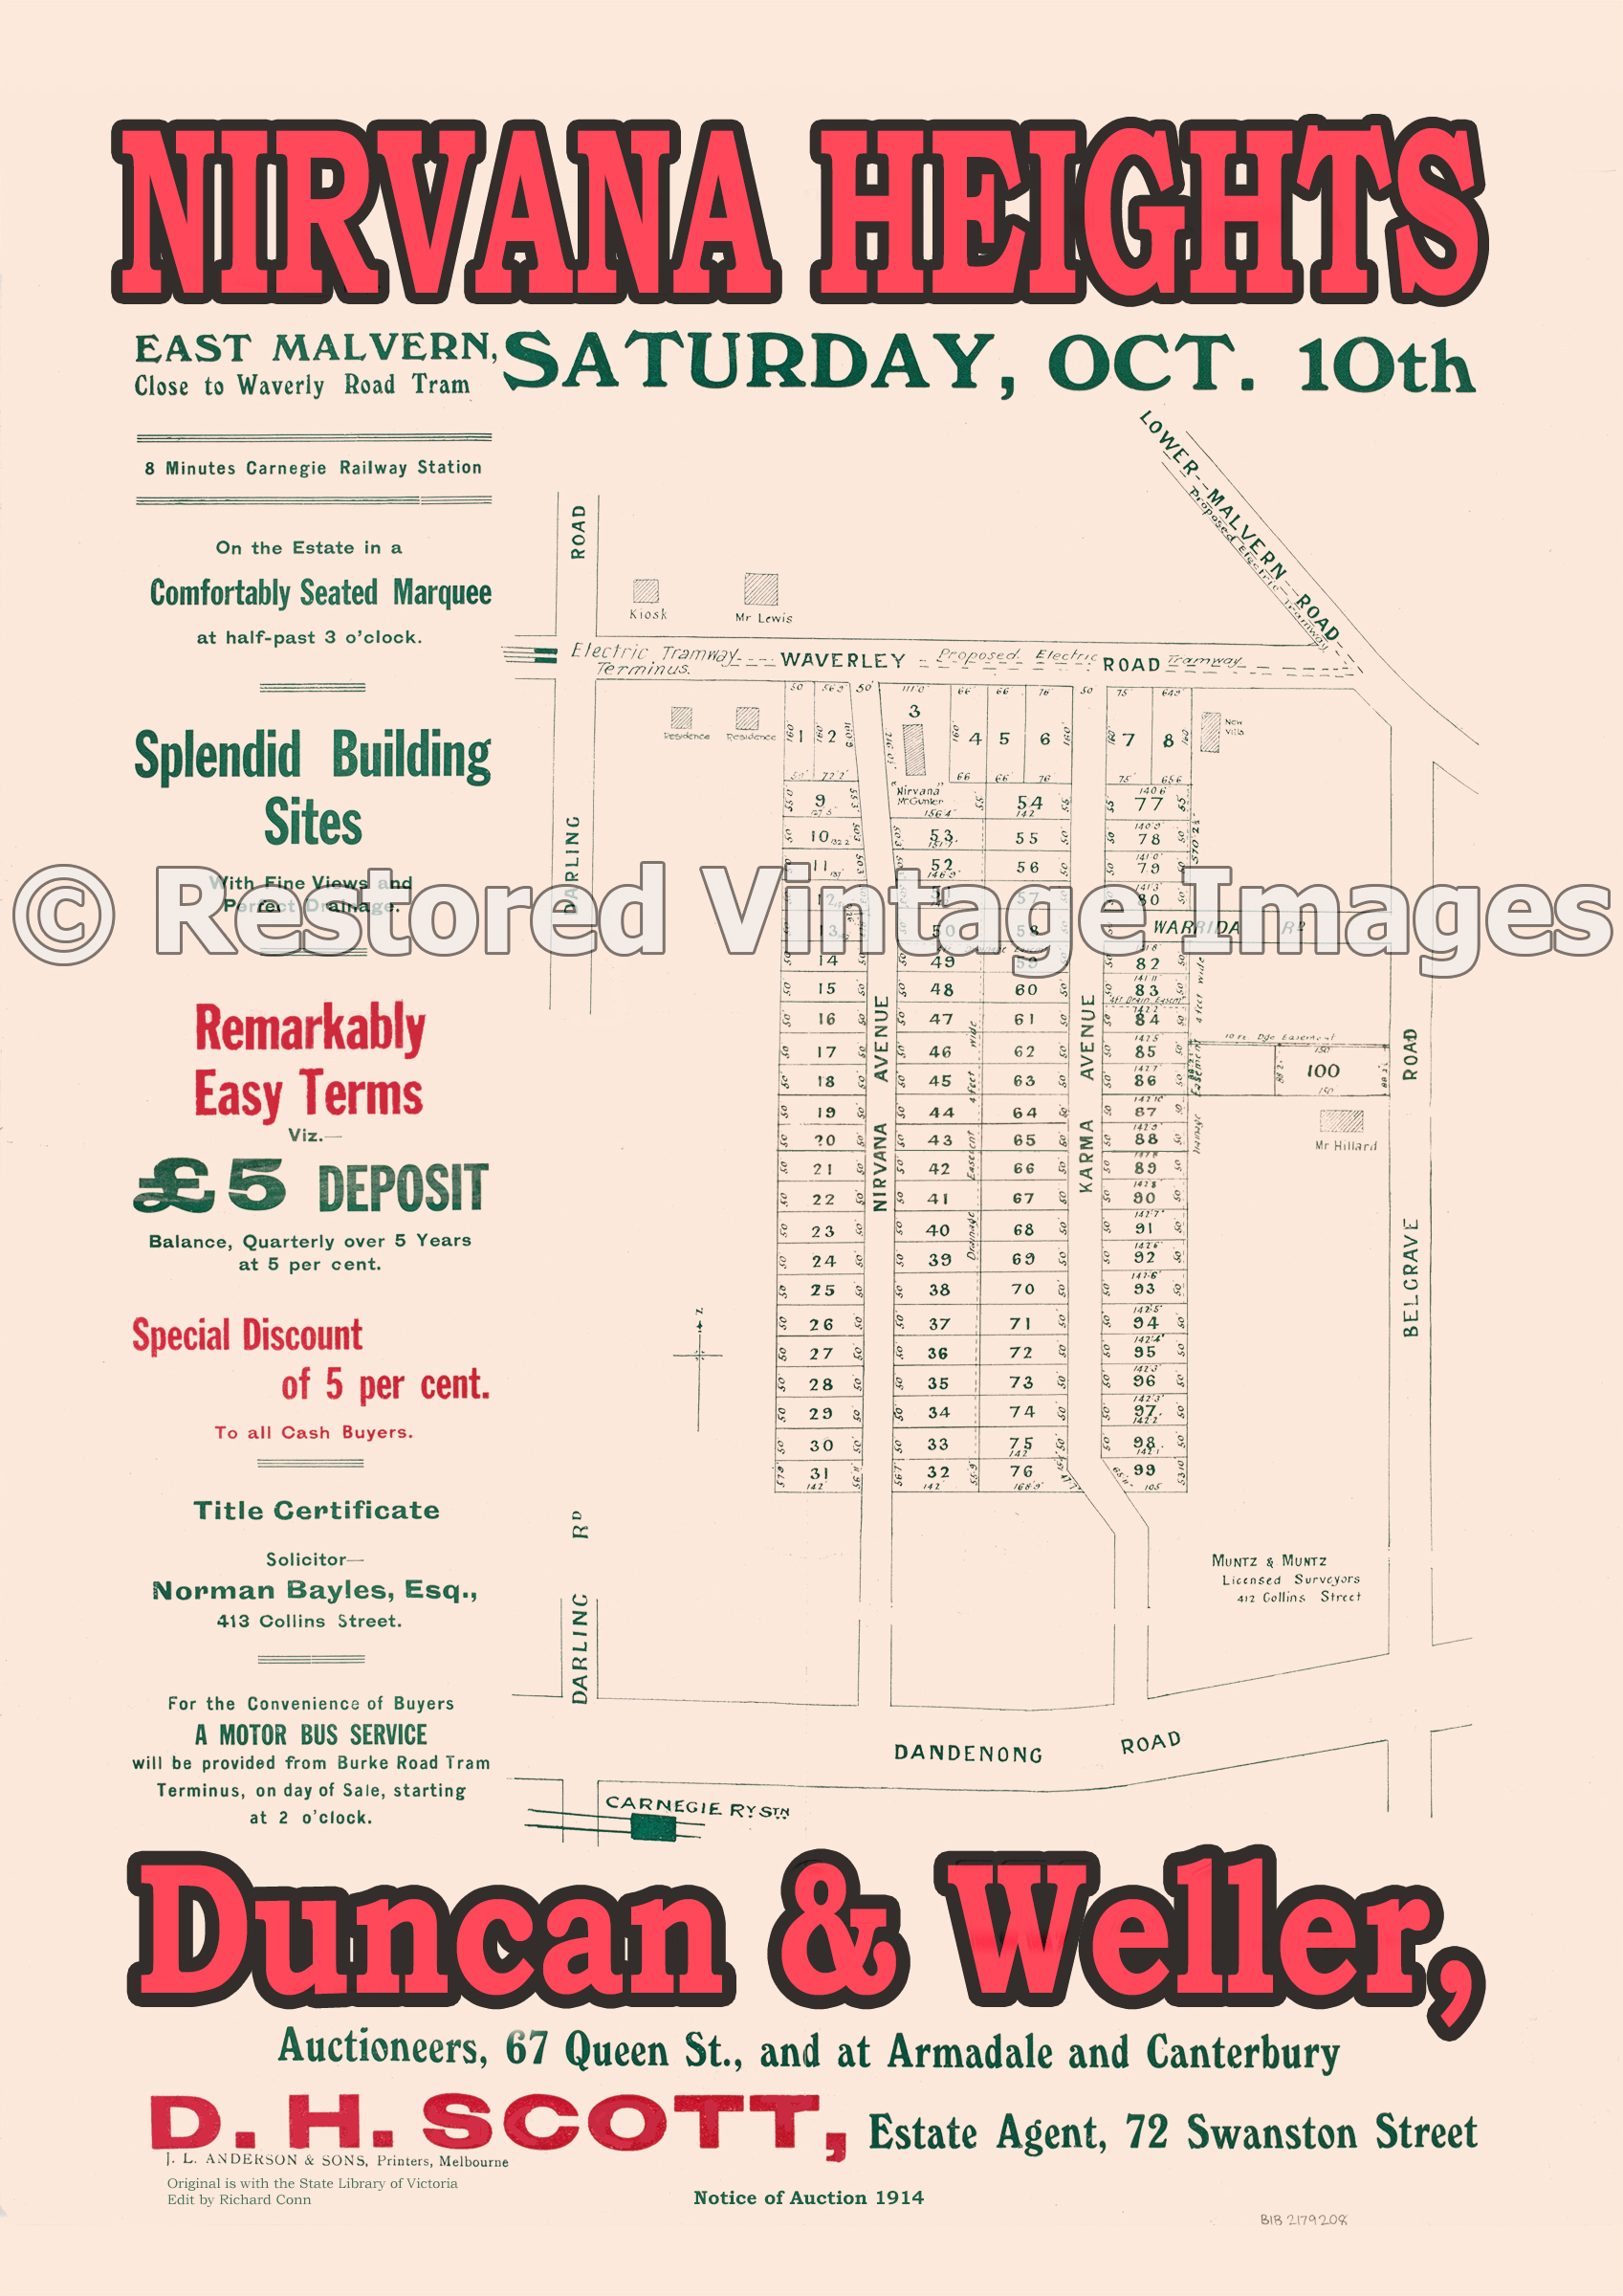 Nirvana Heights 10th October 1914 – Malvern East